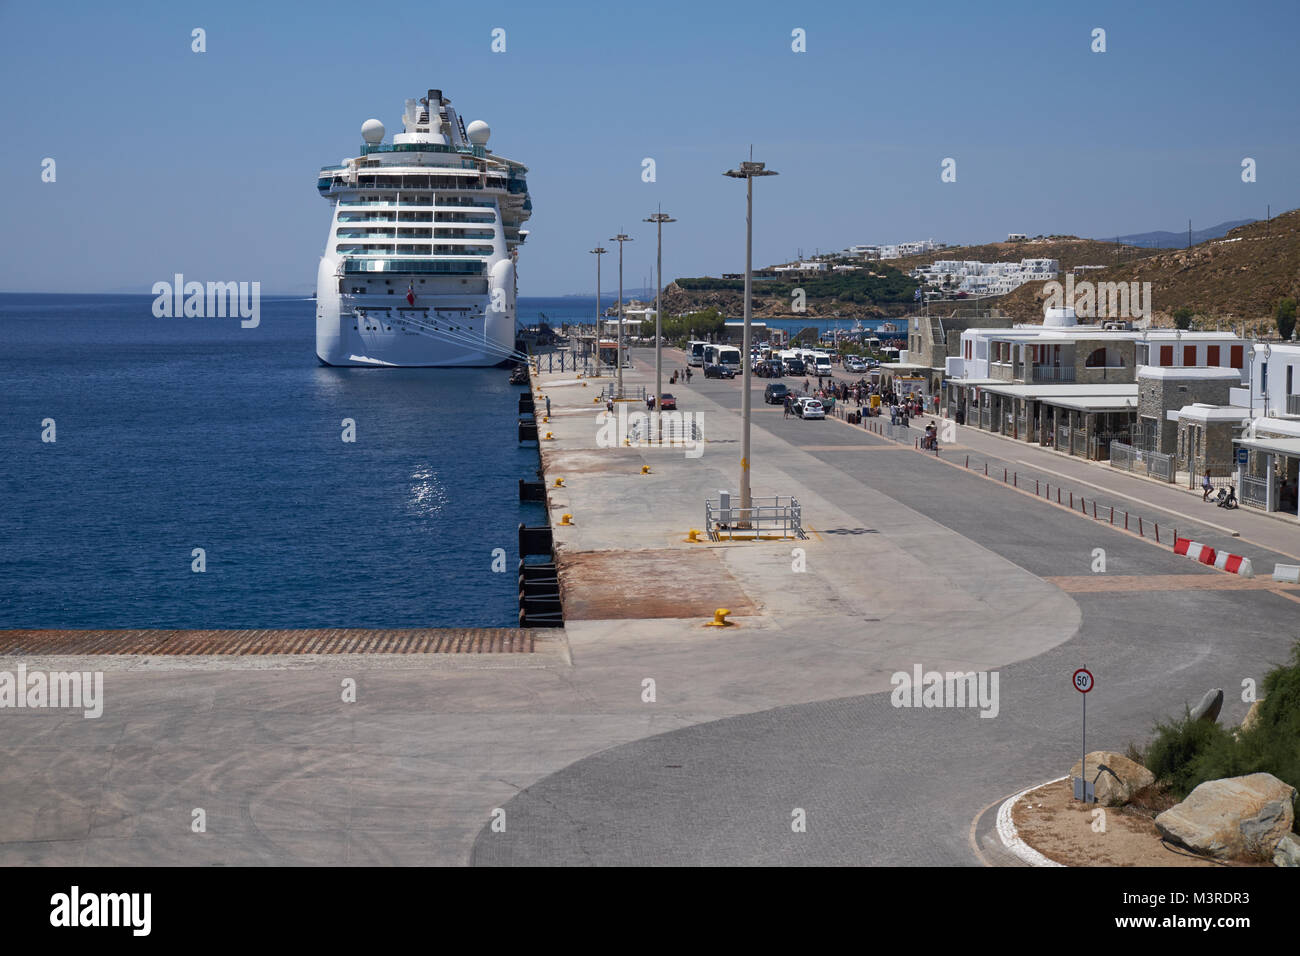 New Port, Mykonos island, Cyclades Islands, Aegean Sea, Greece. Stock Photo